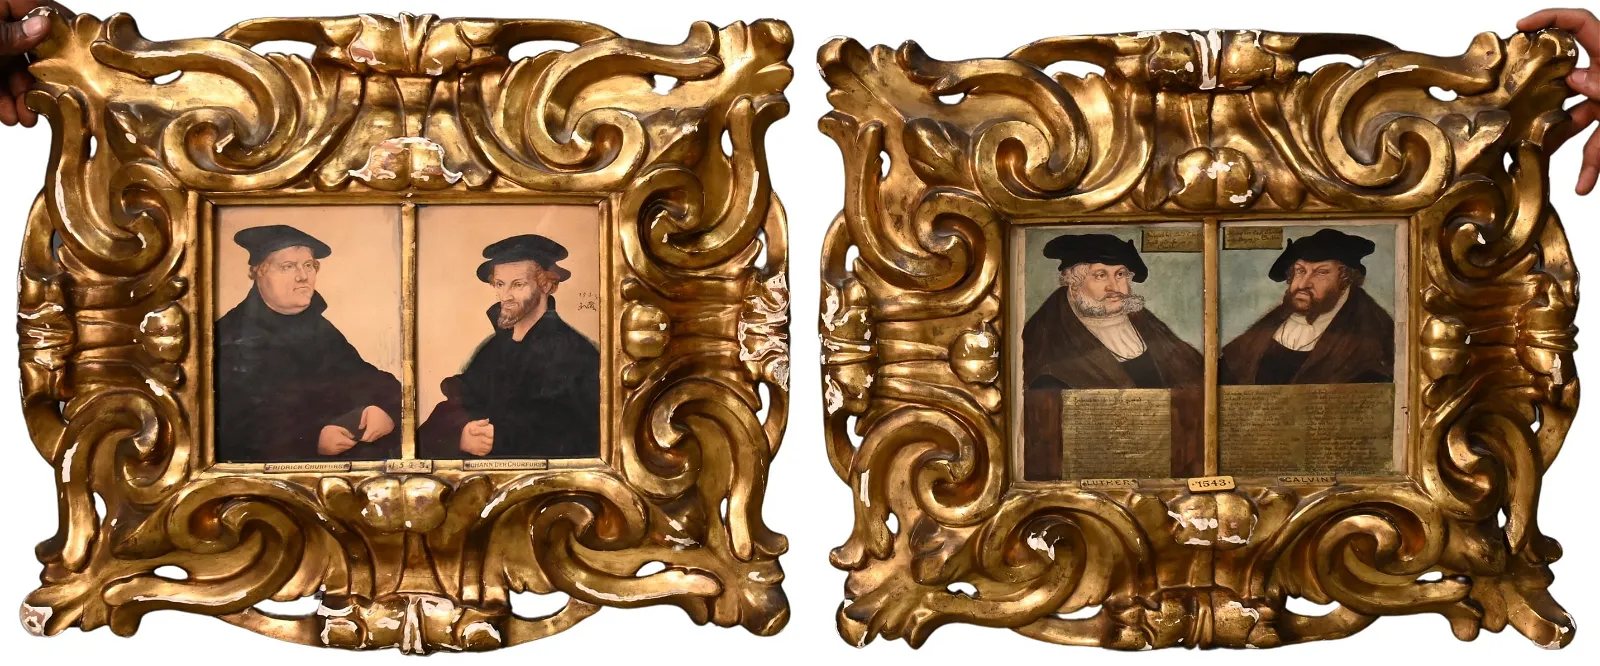 Miniature portraits after Lucas Cranach the Elder soared at Nadeau&#8217;s